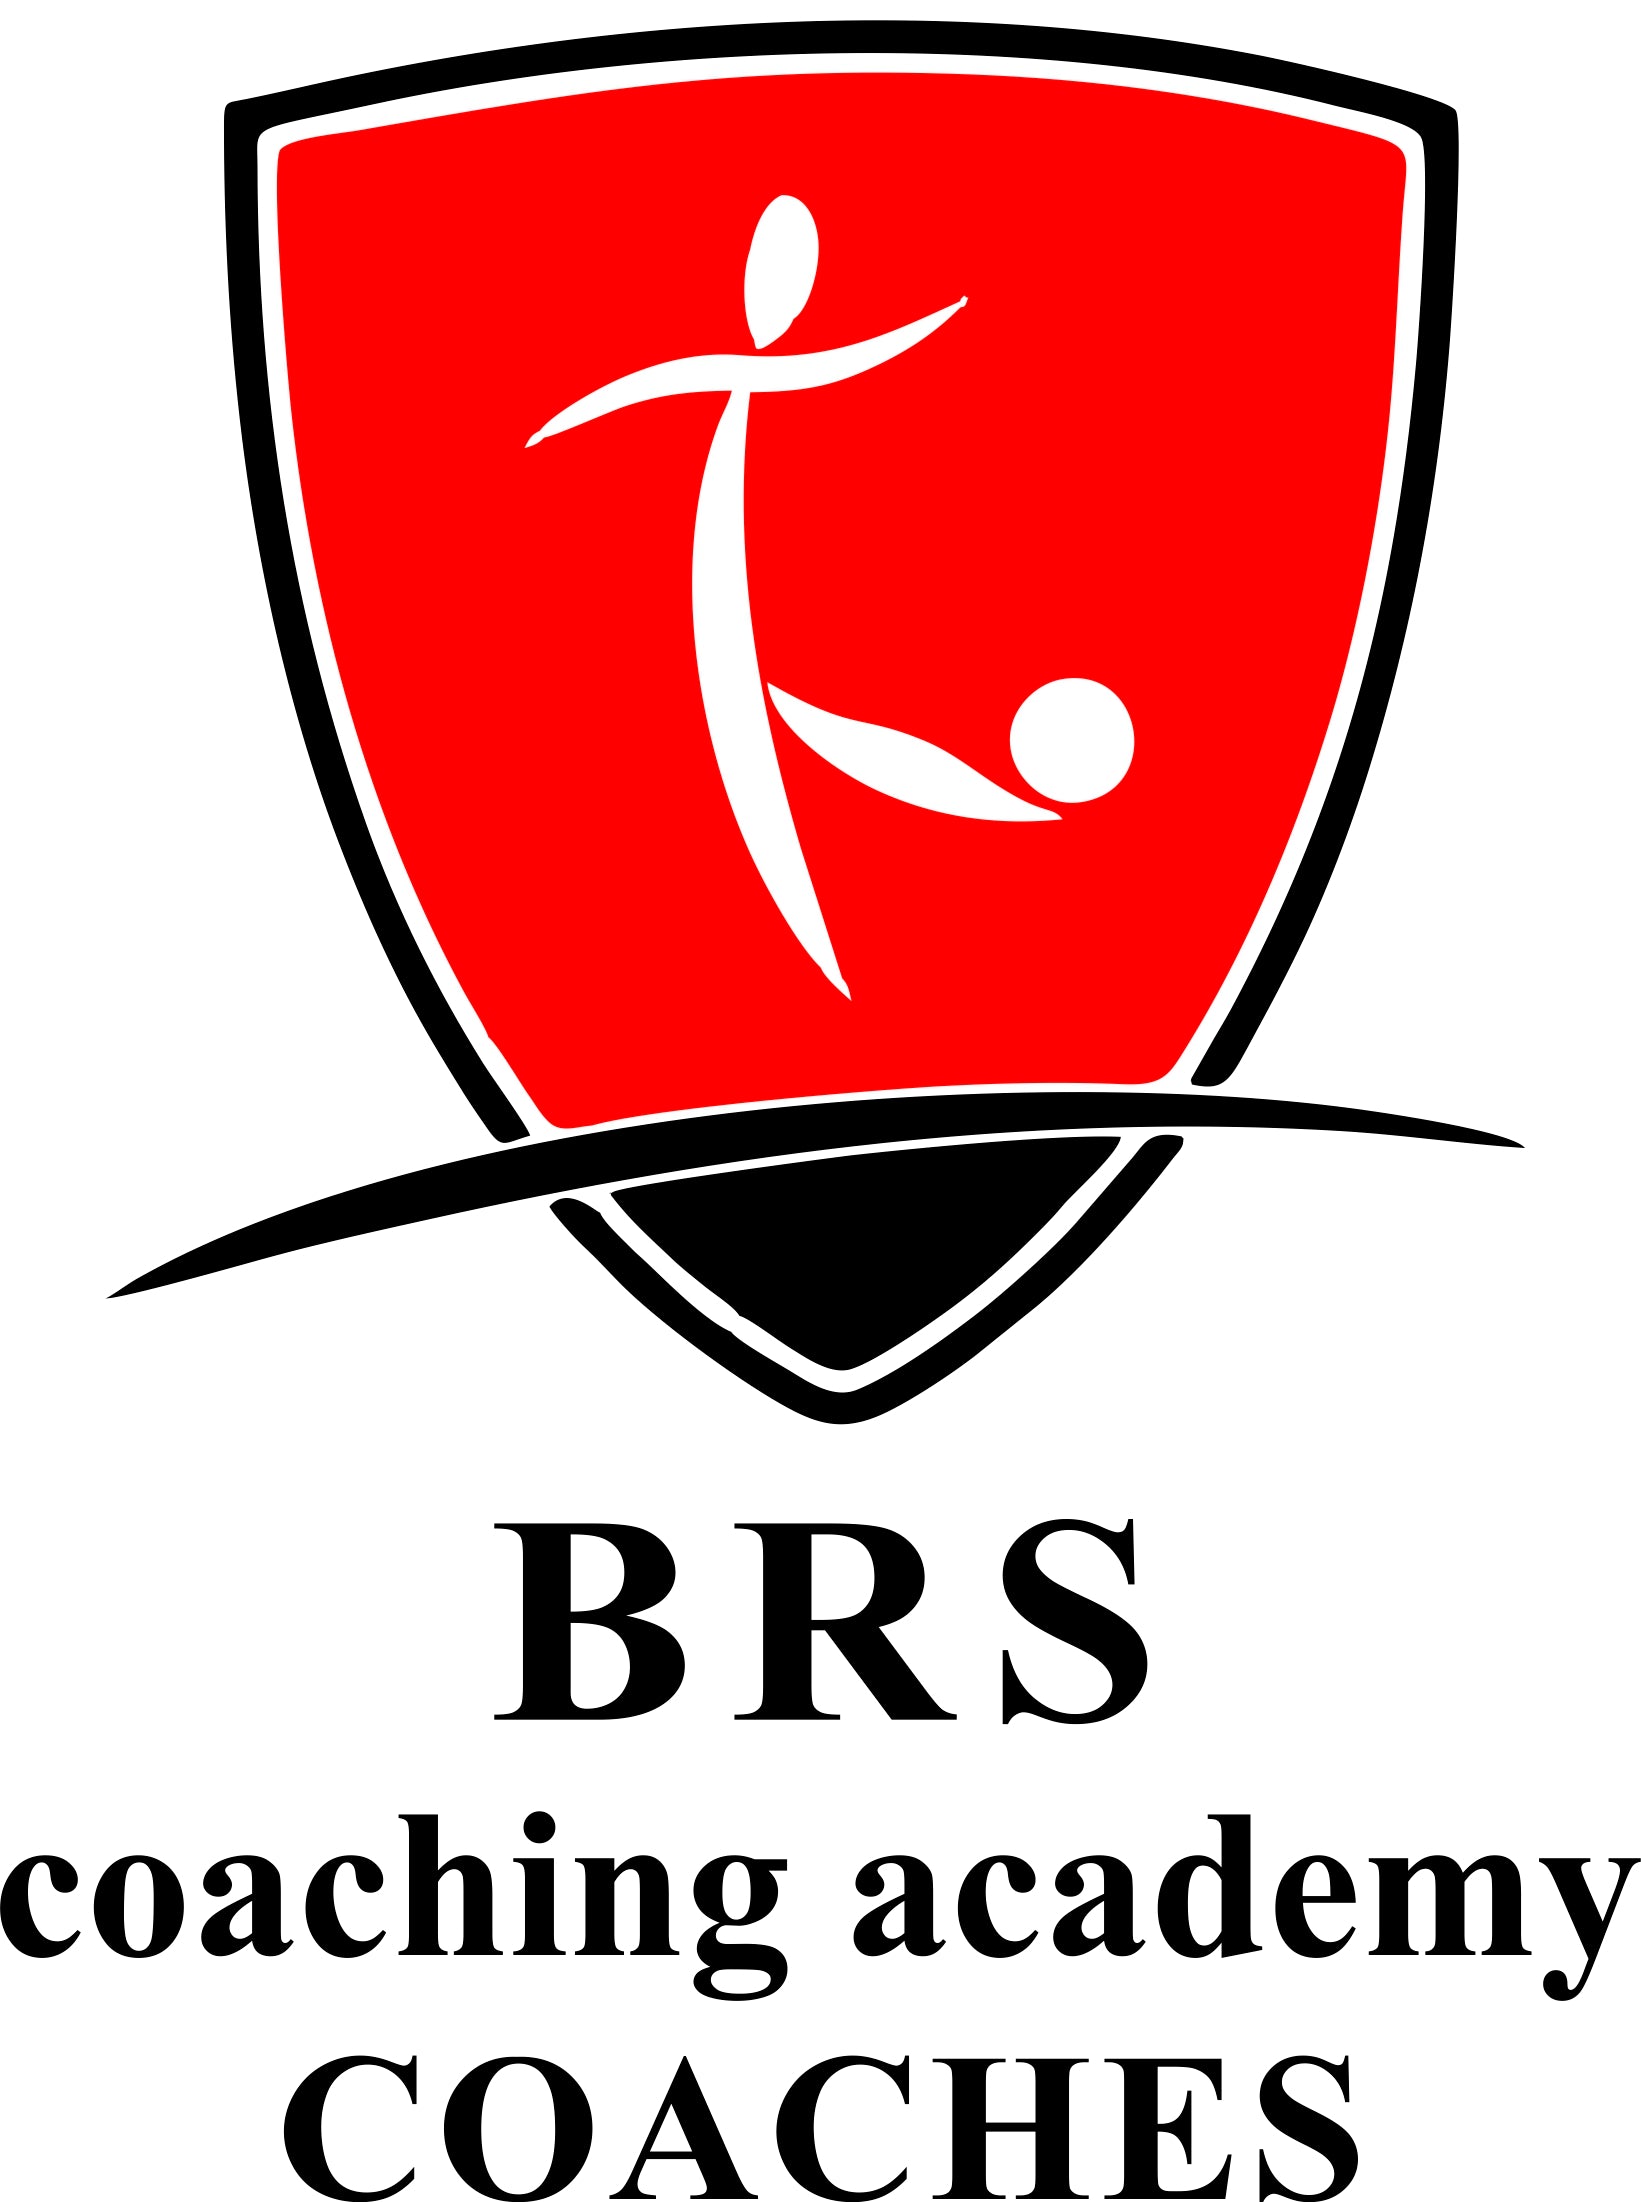 BRS Coaching Academy Coaches